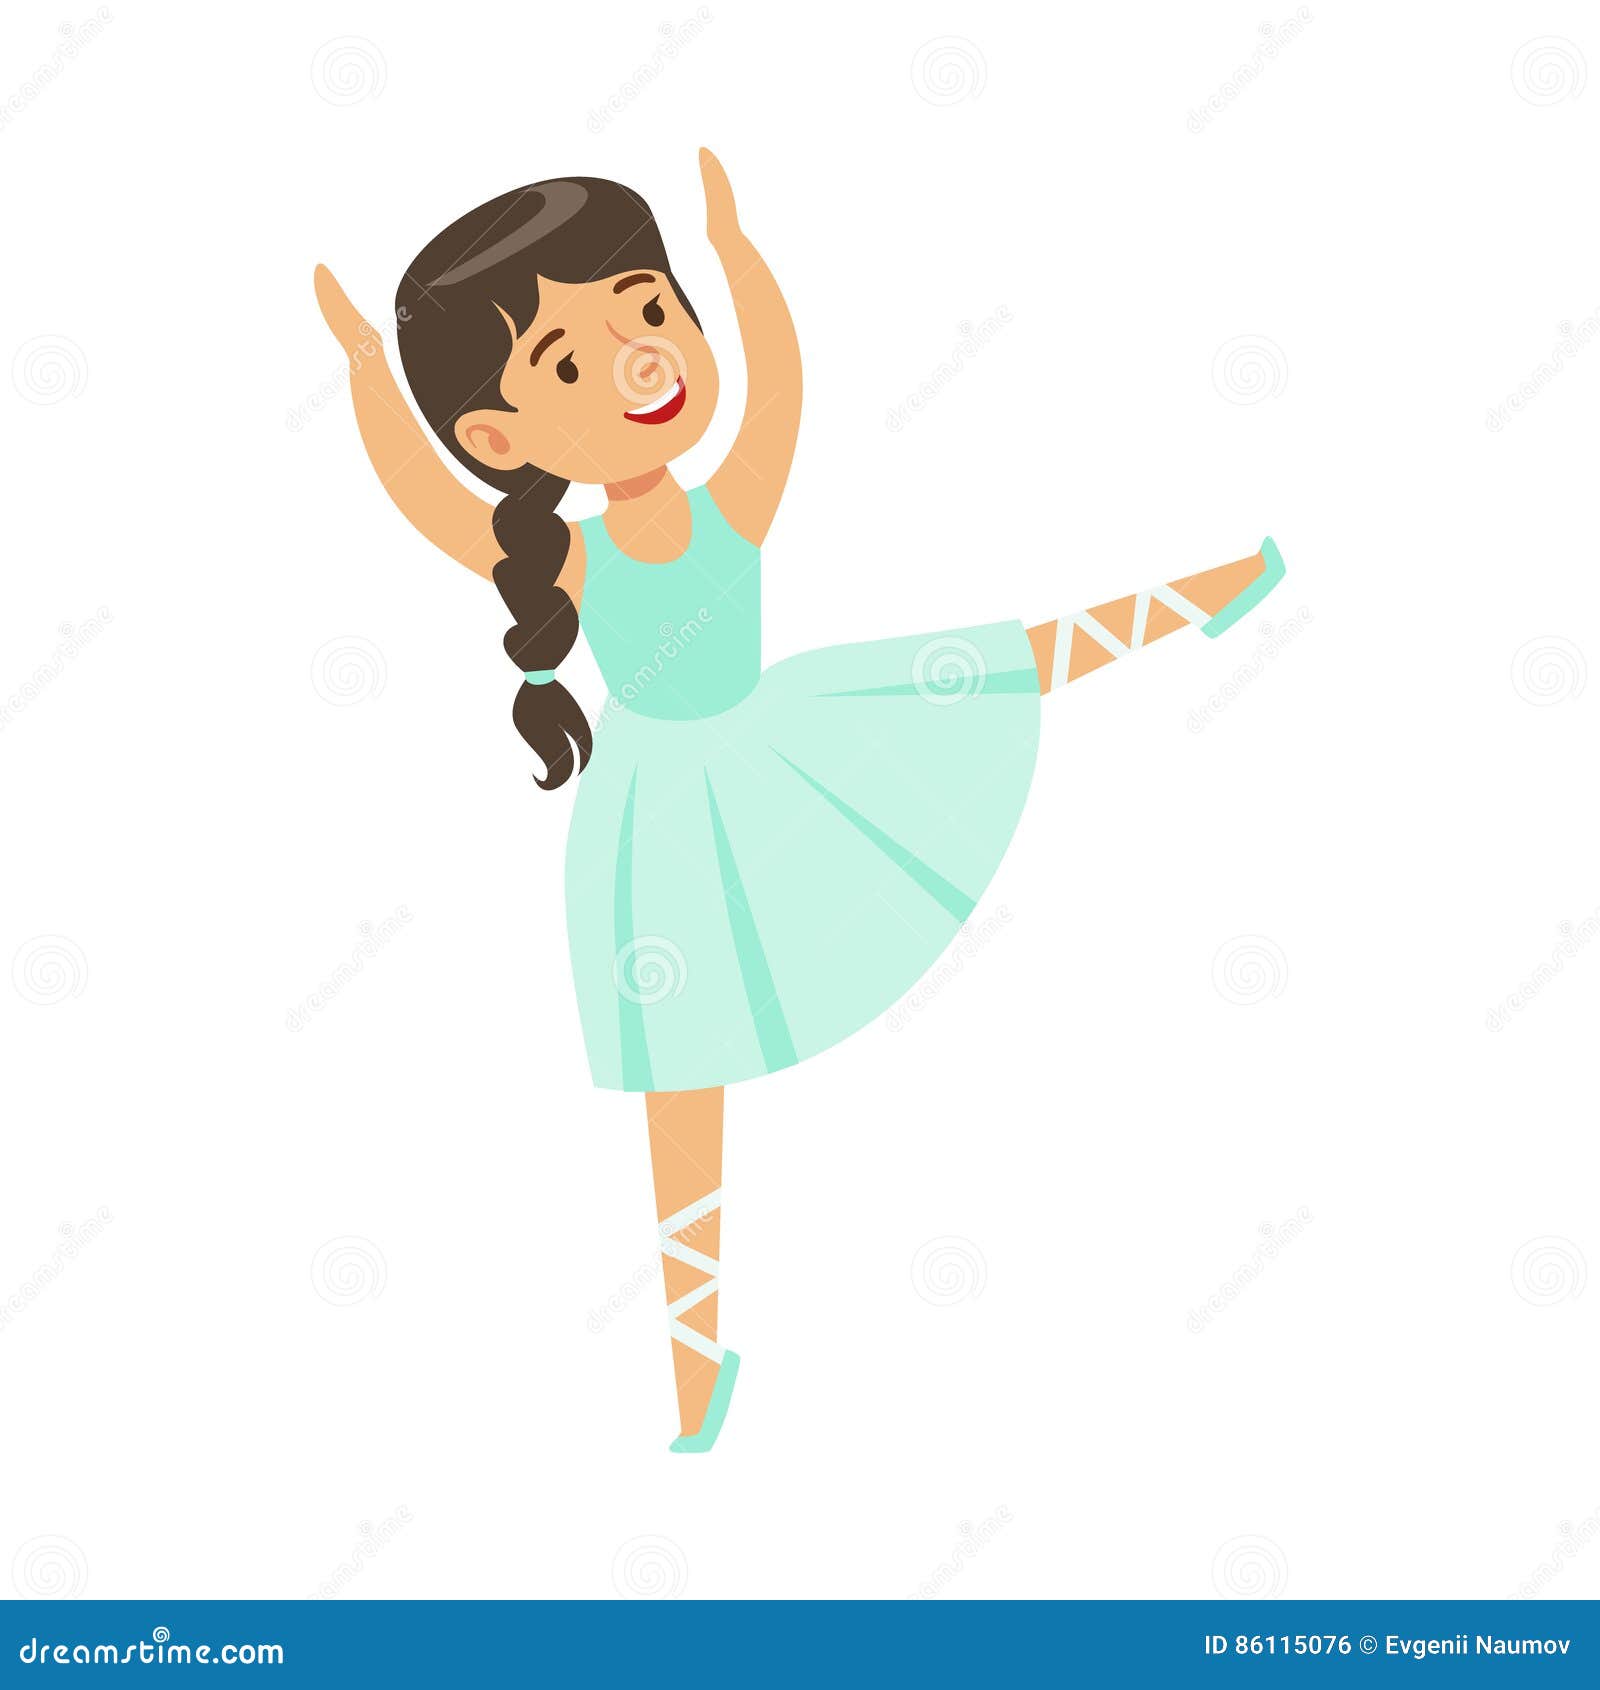 little girl in blue dress with plat dancing ballet in classic dance class, future professional ballerina dancer